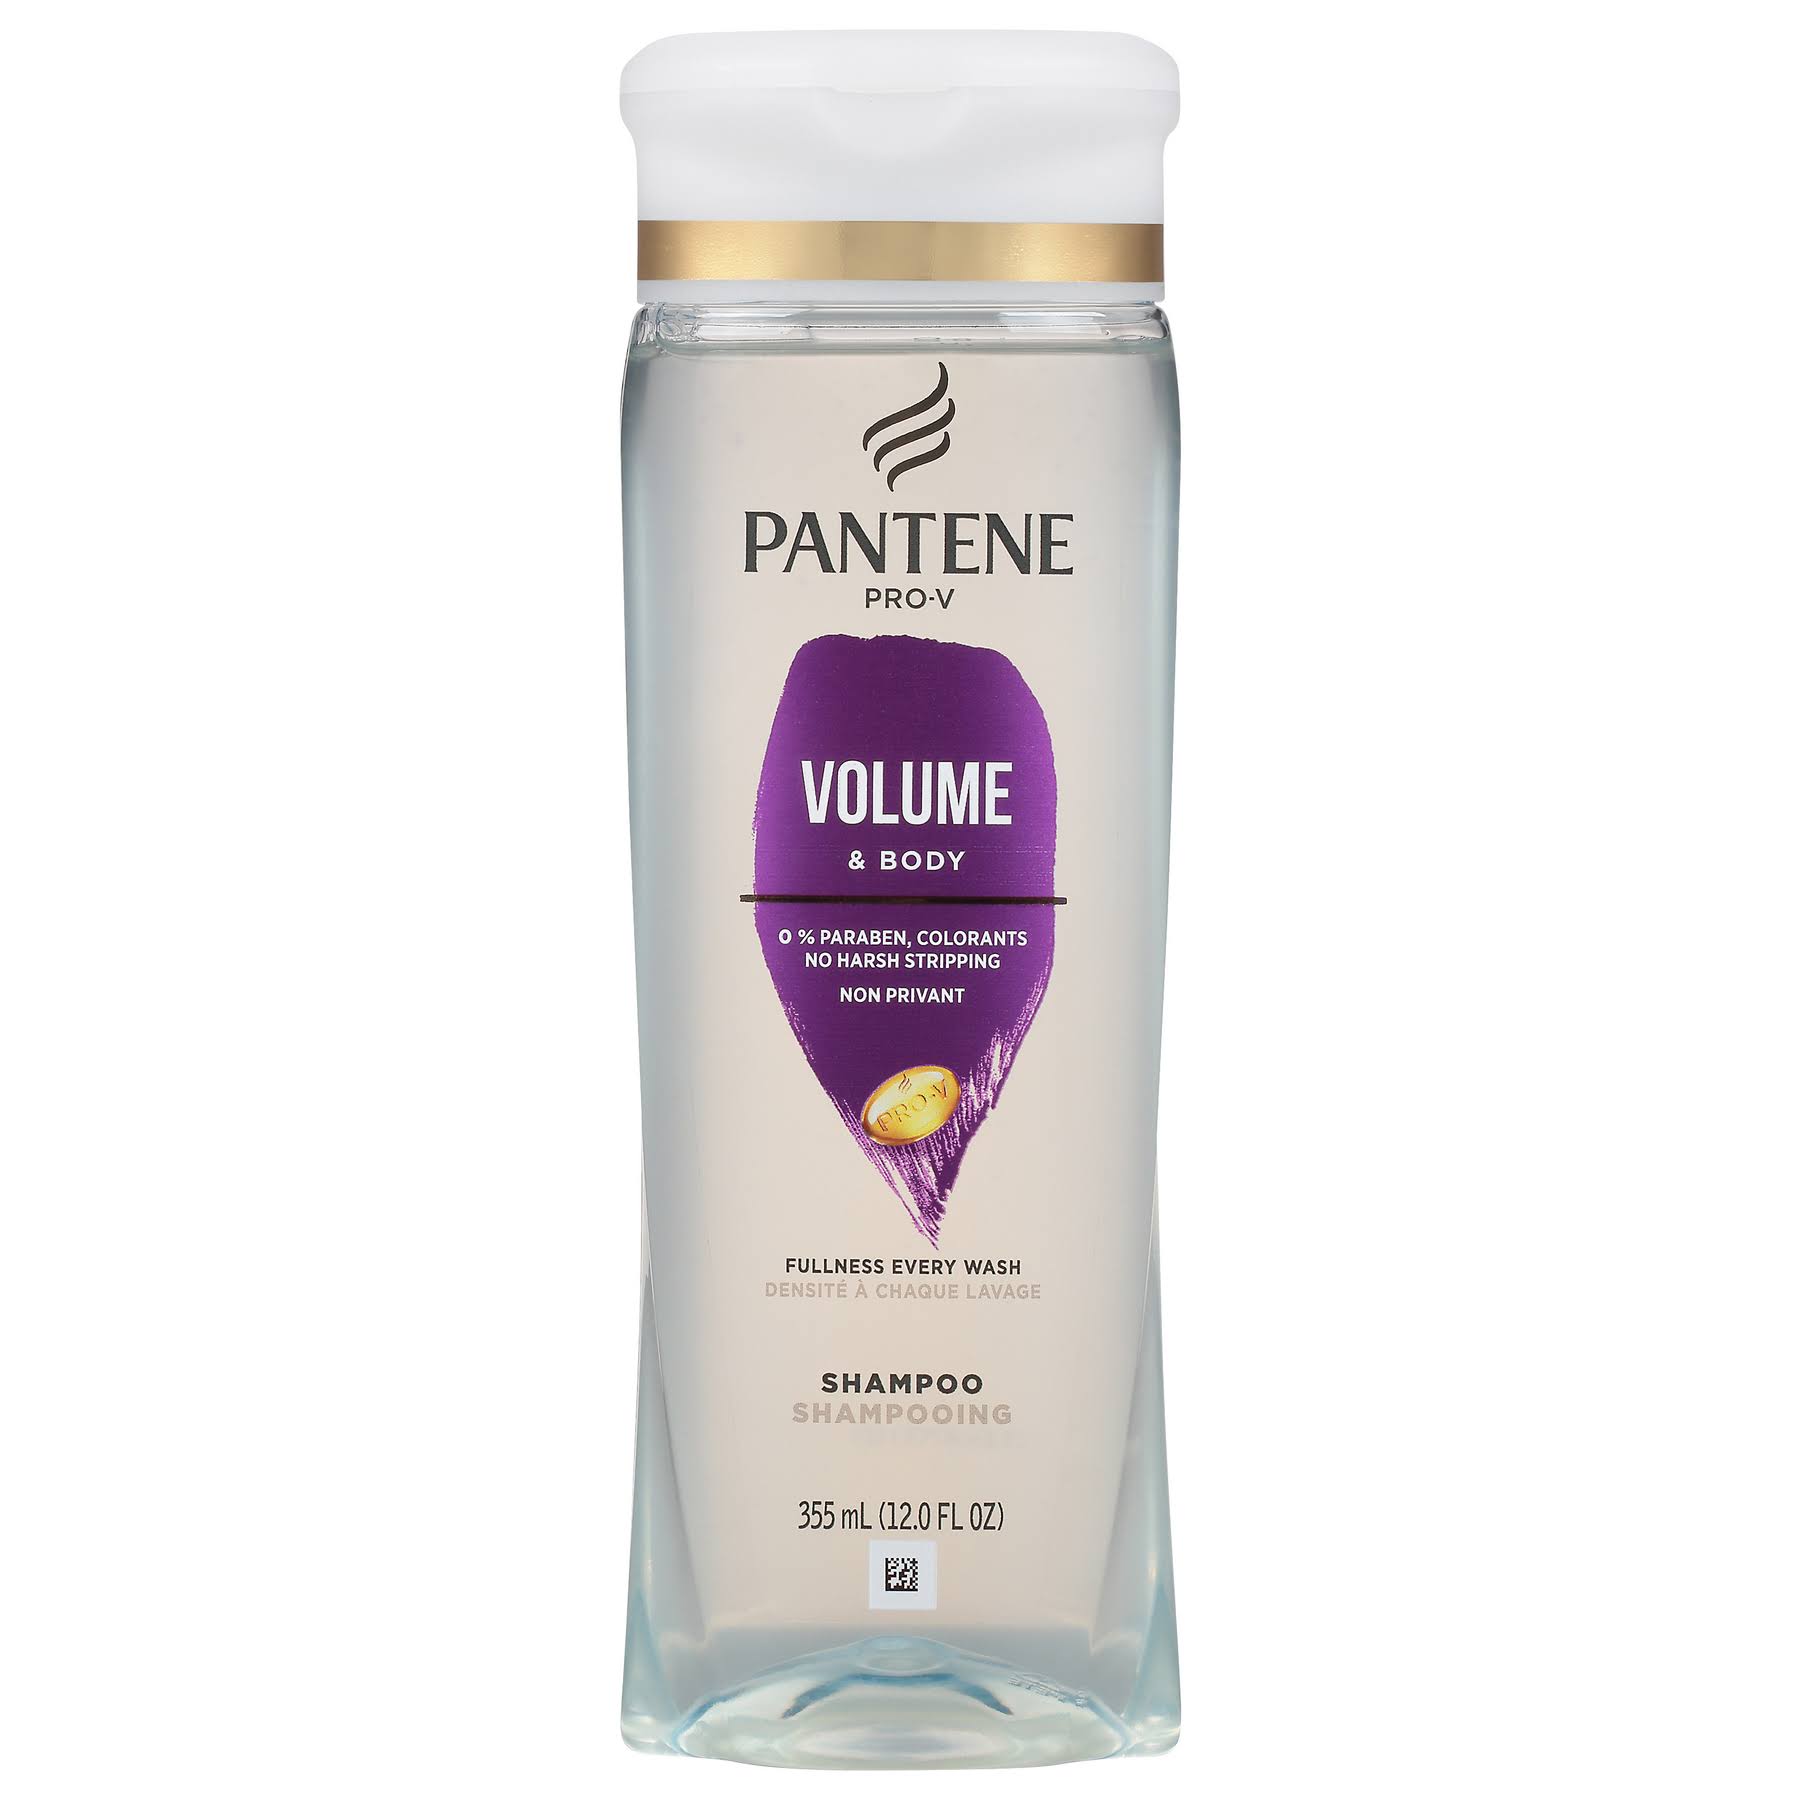 Pantene Pro-V Volume & Body Shampoo 12 oz Bottle